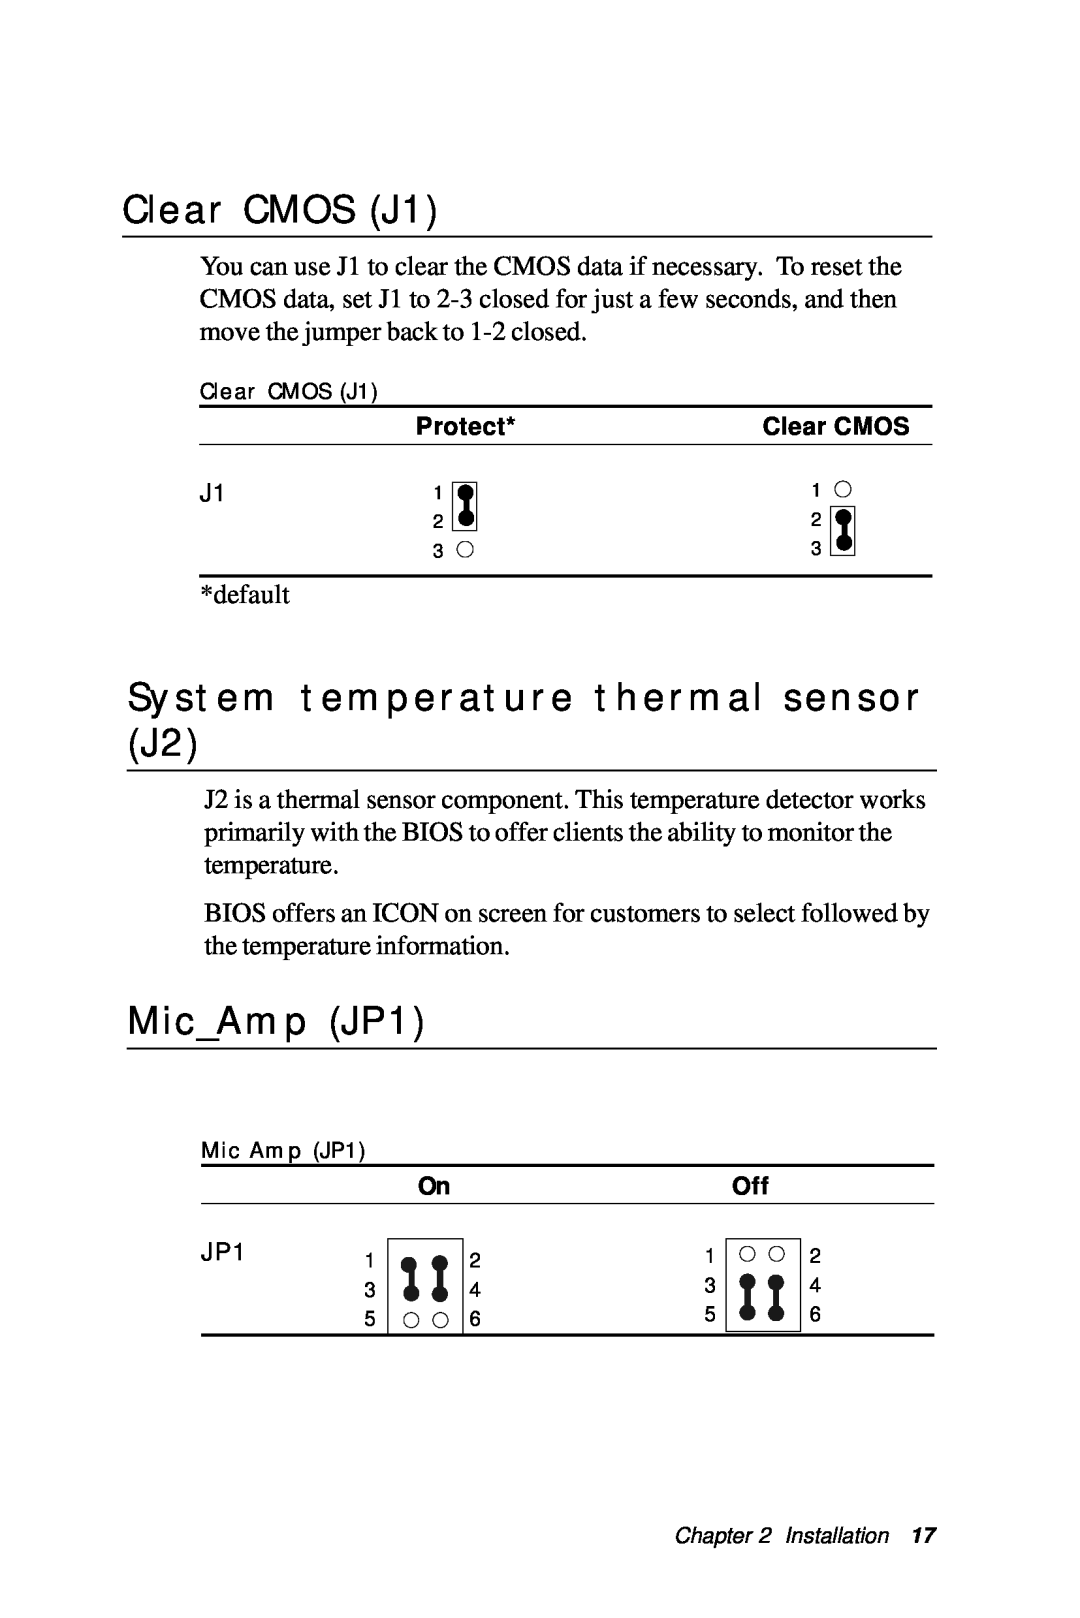 IBM All-in-One FC/Socket 370 Celeron, PCM-6890B manual Clear CMOS J1, System temperature thermal sensor J2, MicAmp JP1 